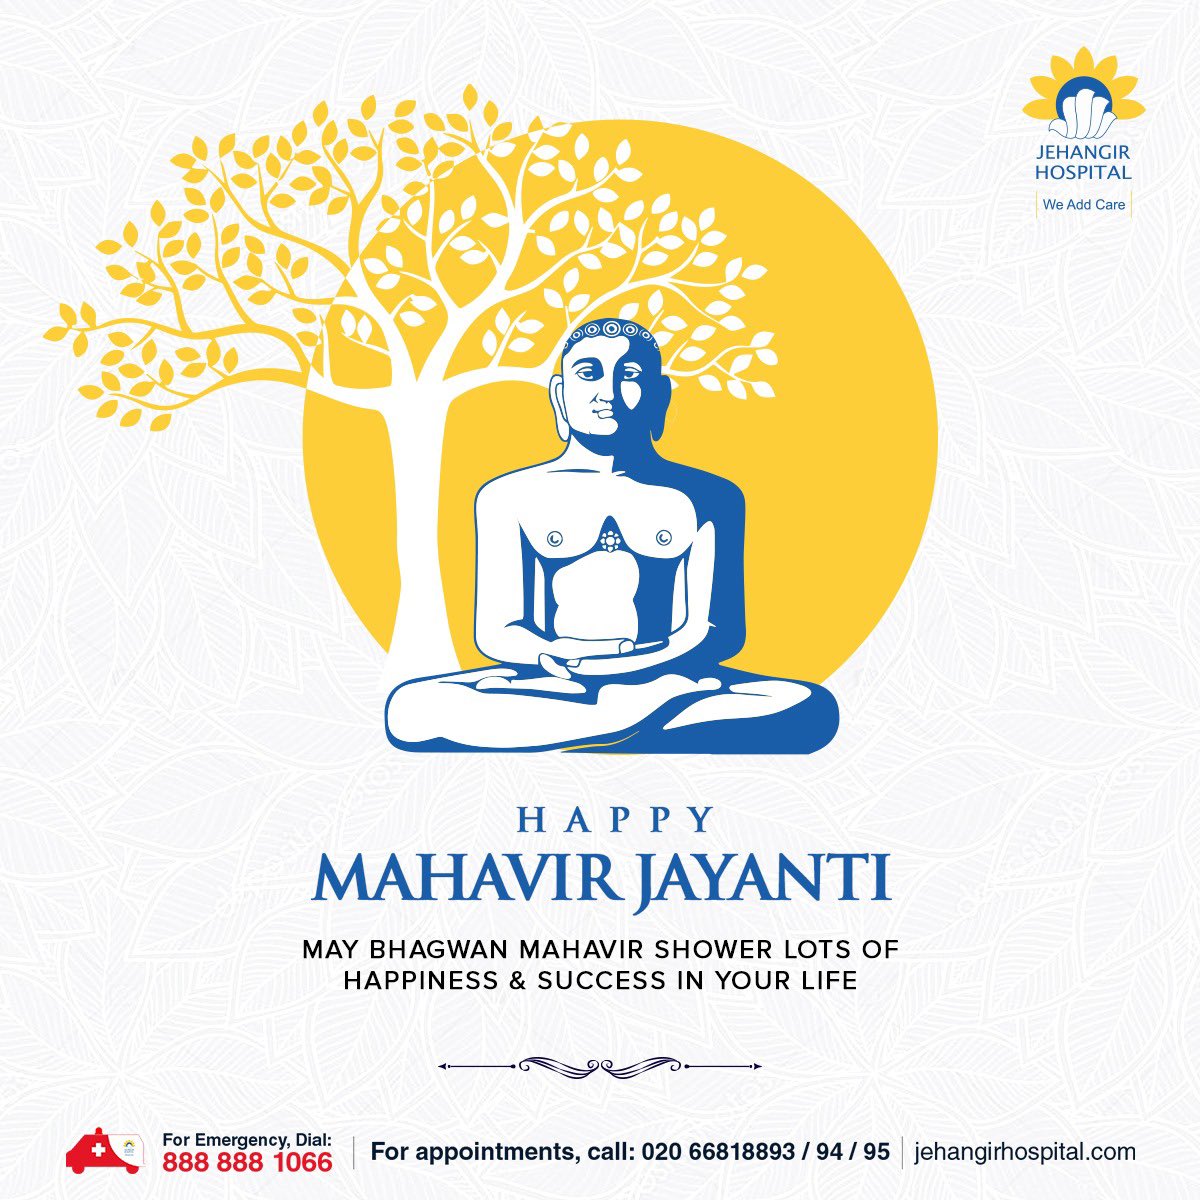 On the auspicious occasion of Mahavir Jayanti, We wish you lots of happiness, good health and success.
#JehangirHospital #WeAddCare #MahavirJayanti #Happiness #GoodHealth